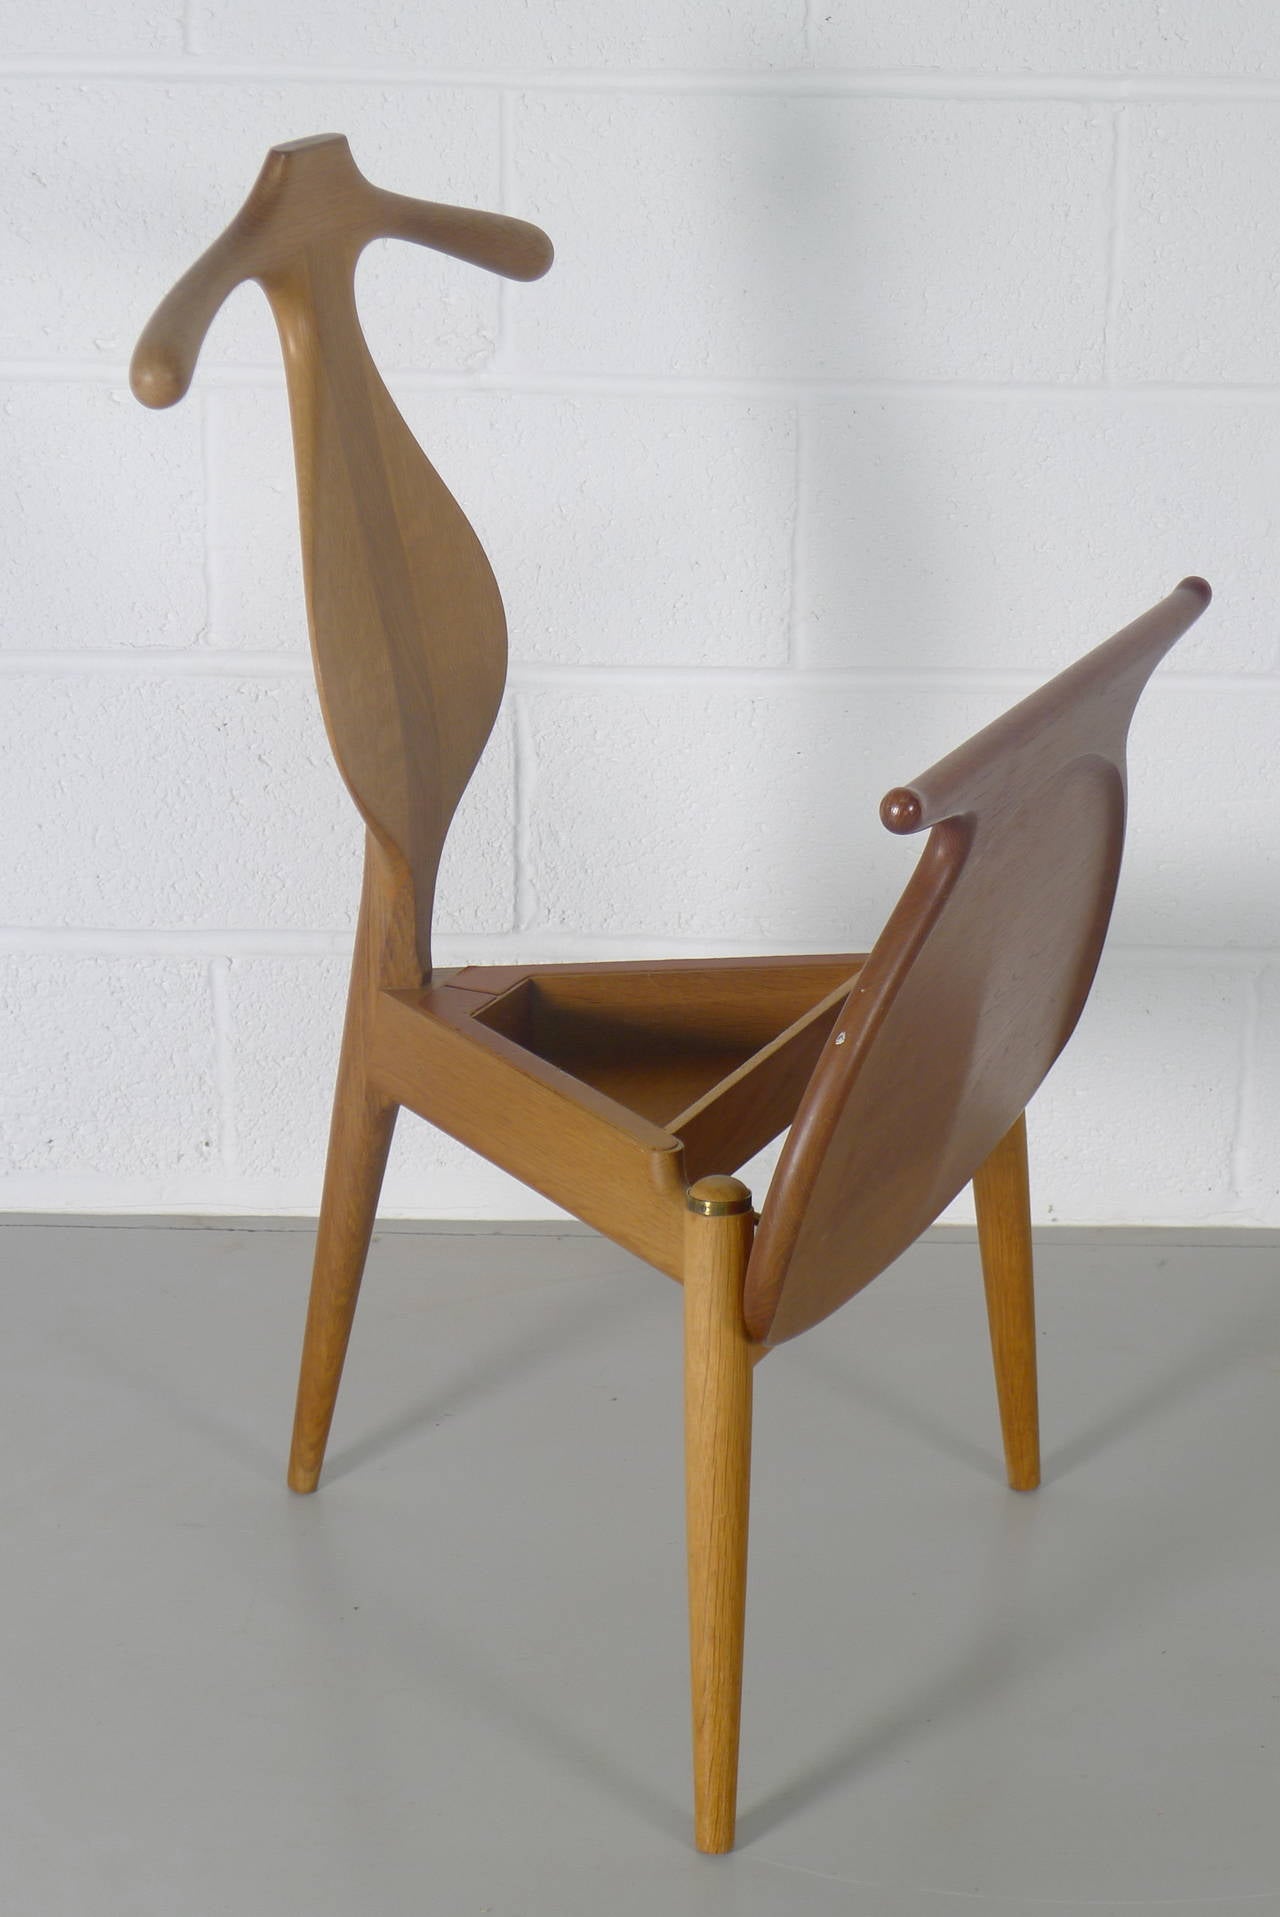 Hans Wegner for Johannes Hansen, Denmark, 1953. Teak seat and oak framework, signed with braised makers mark to underside. Fabulous example in perfect vintage condition.